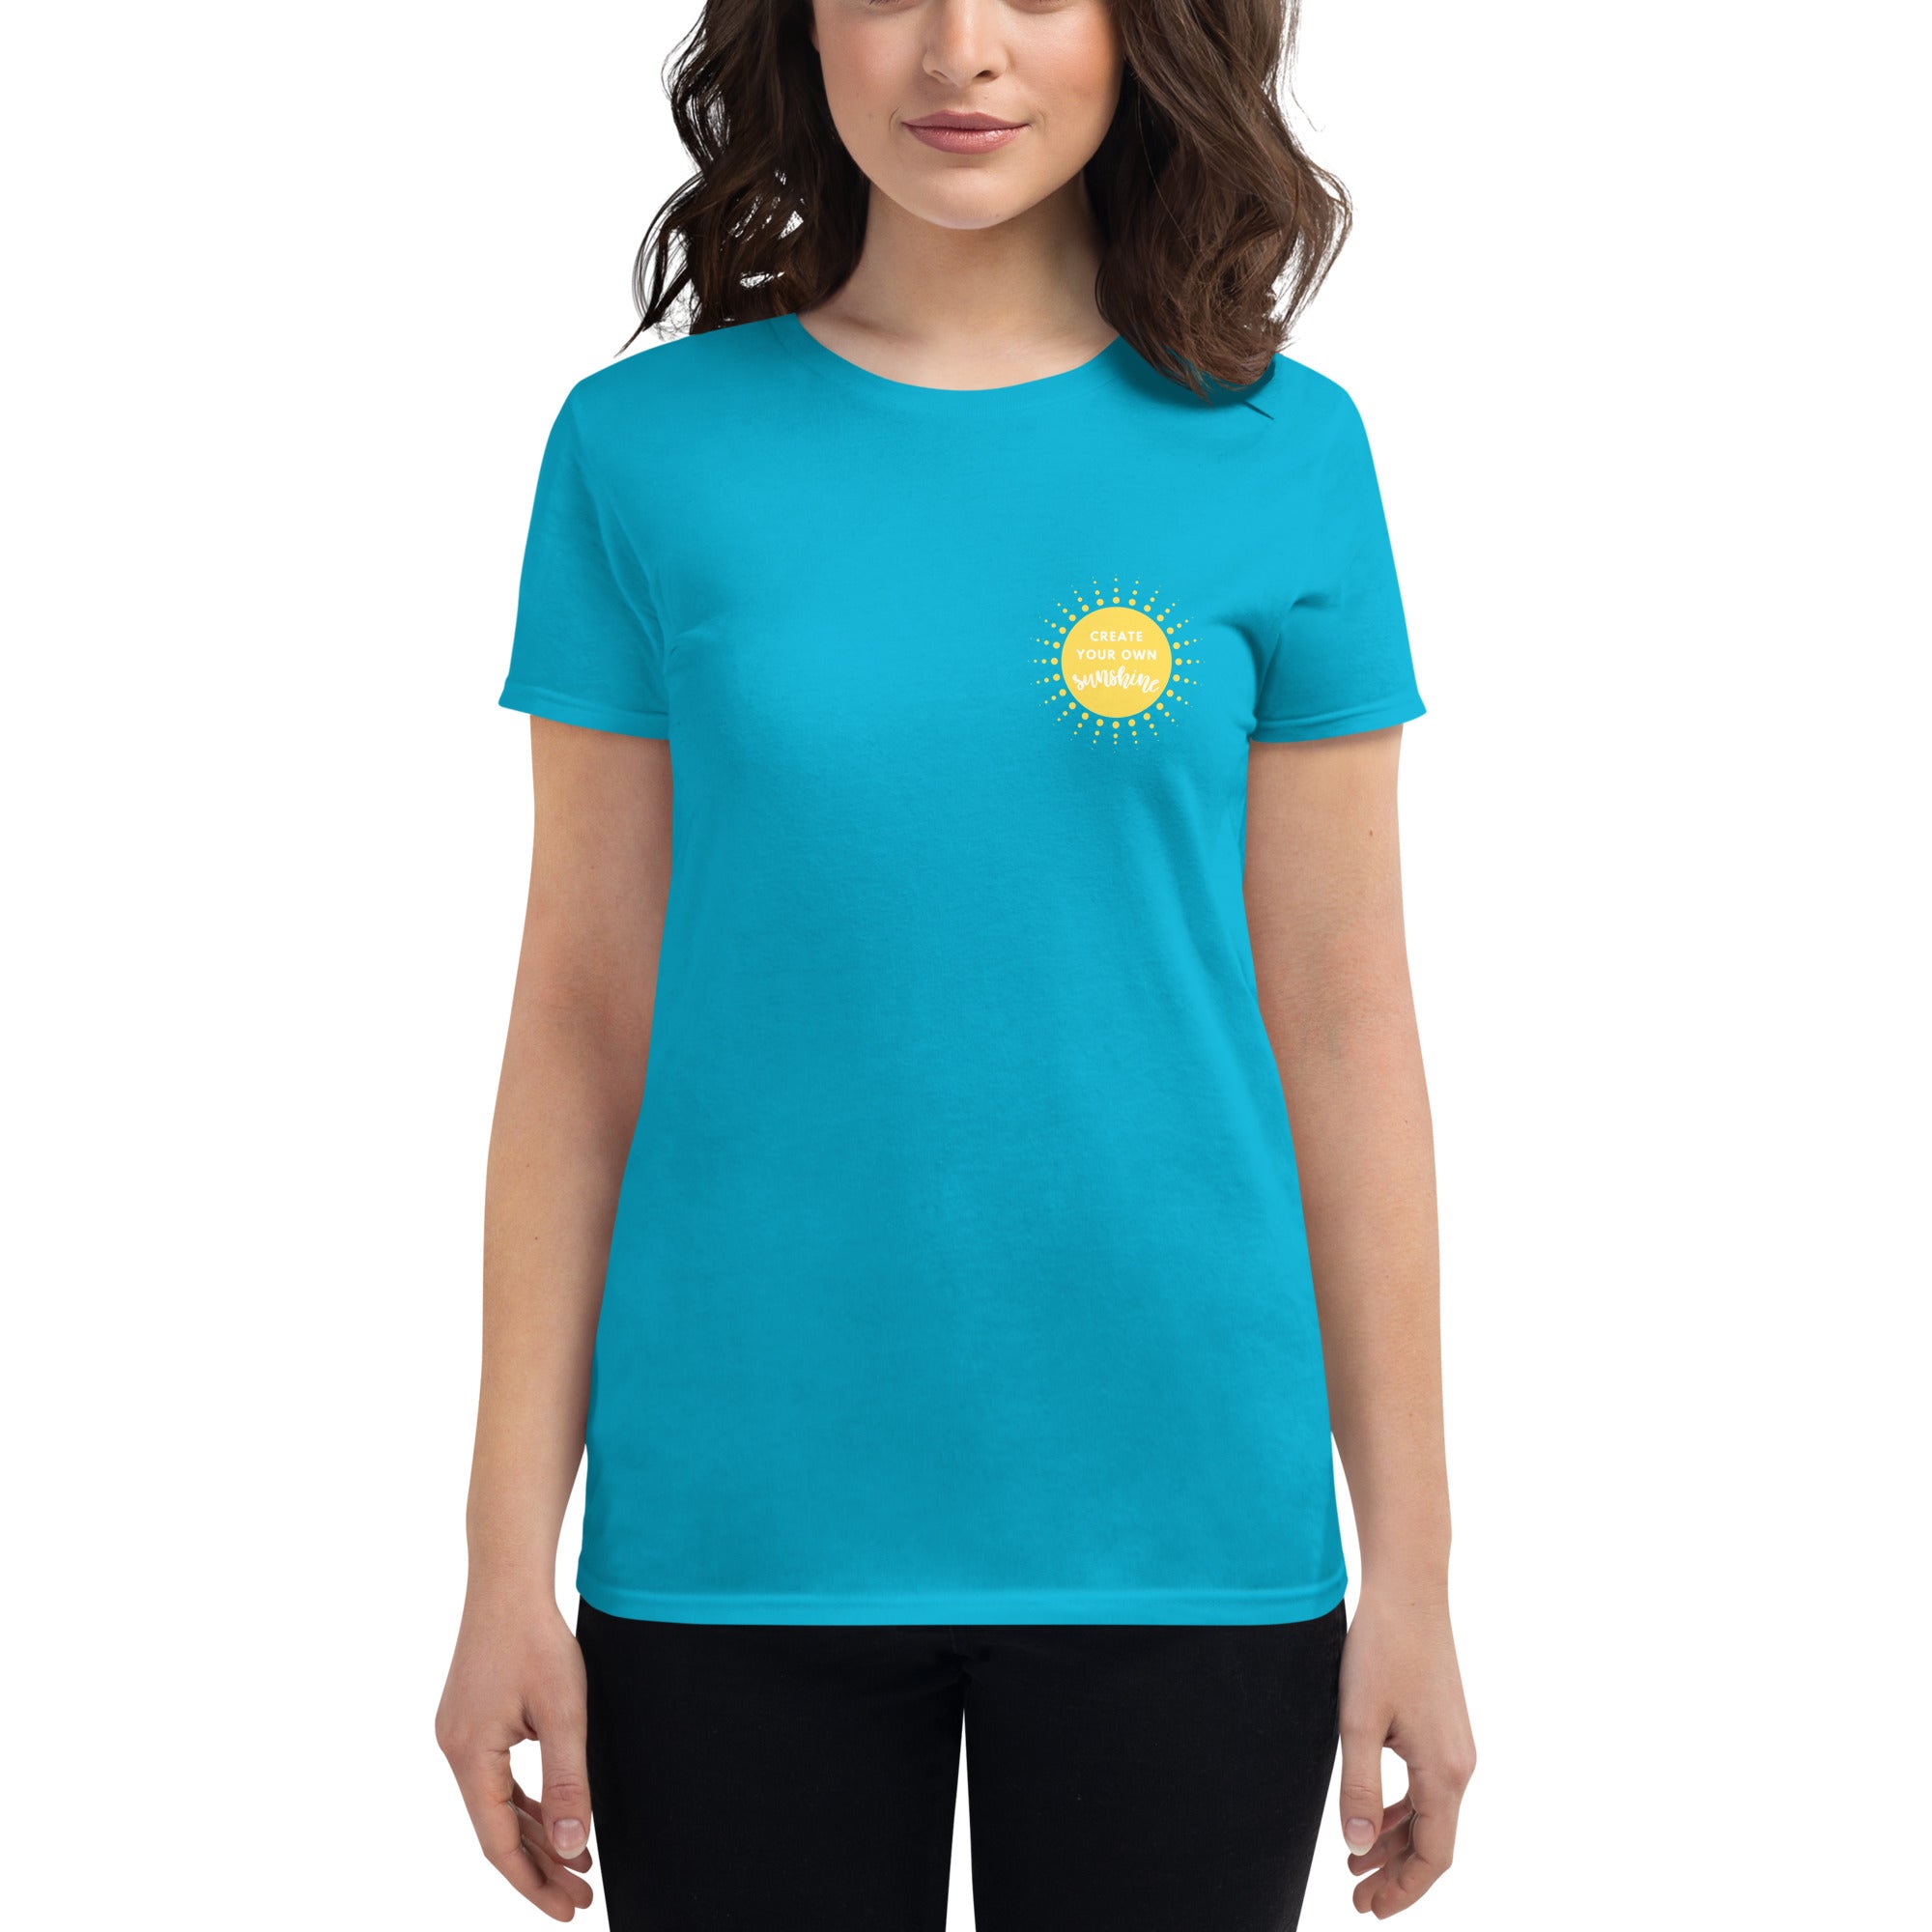 Create Your Own Sunshine Women's T-shirt